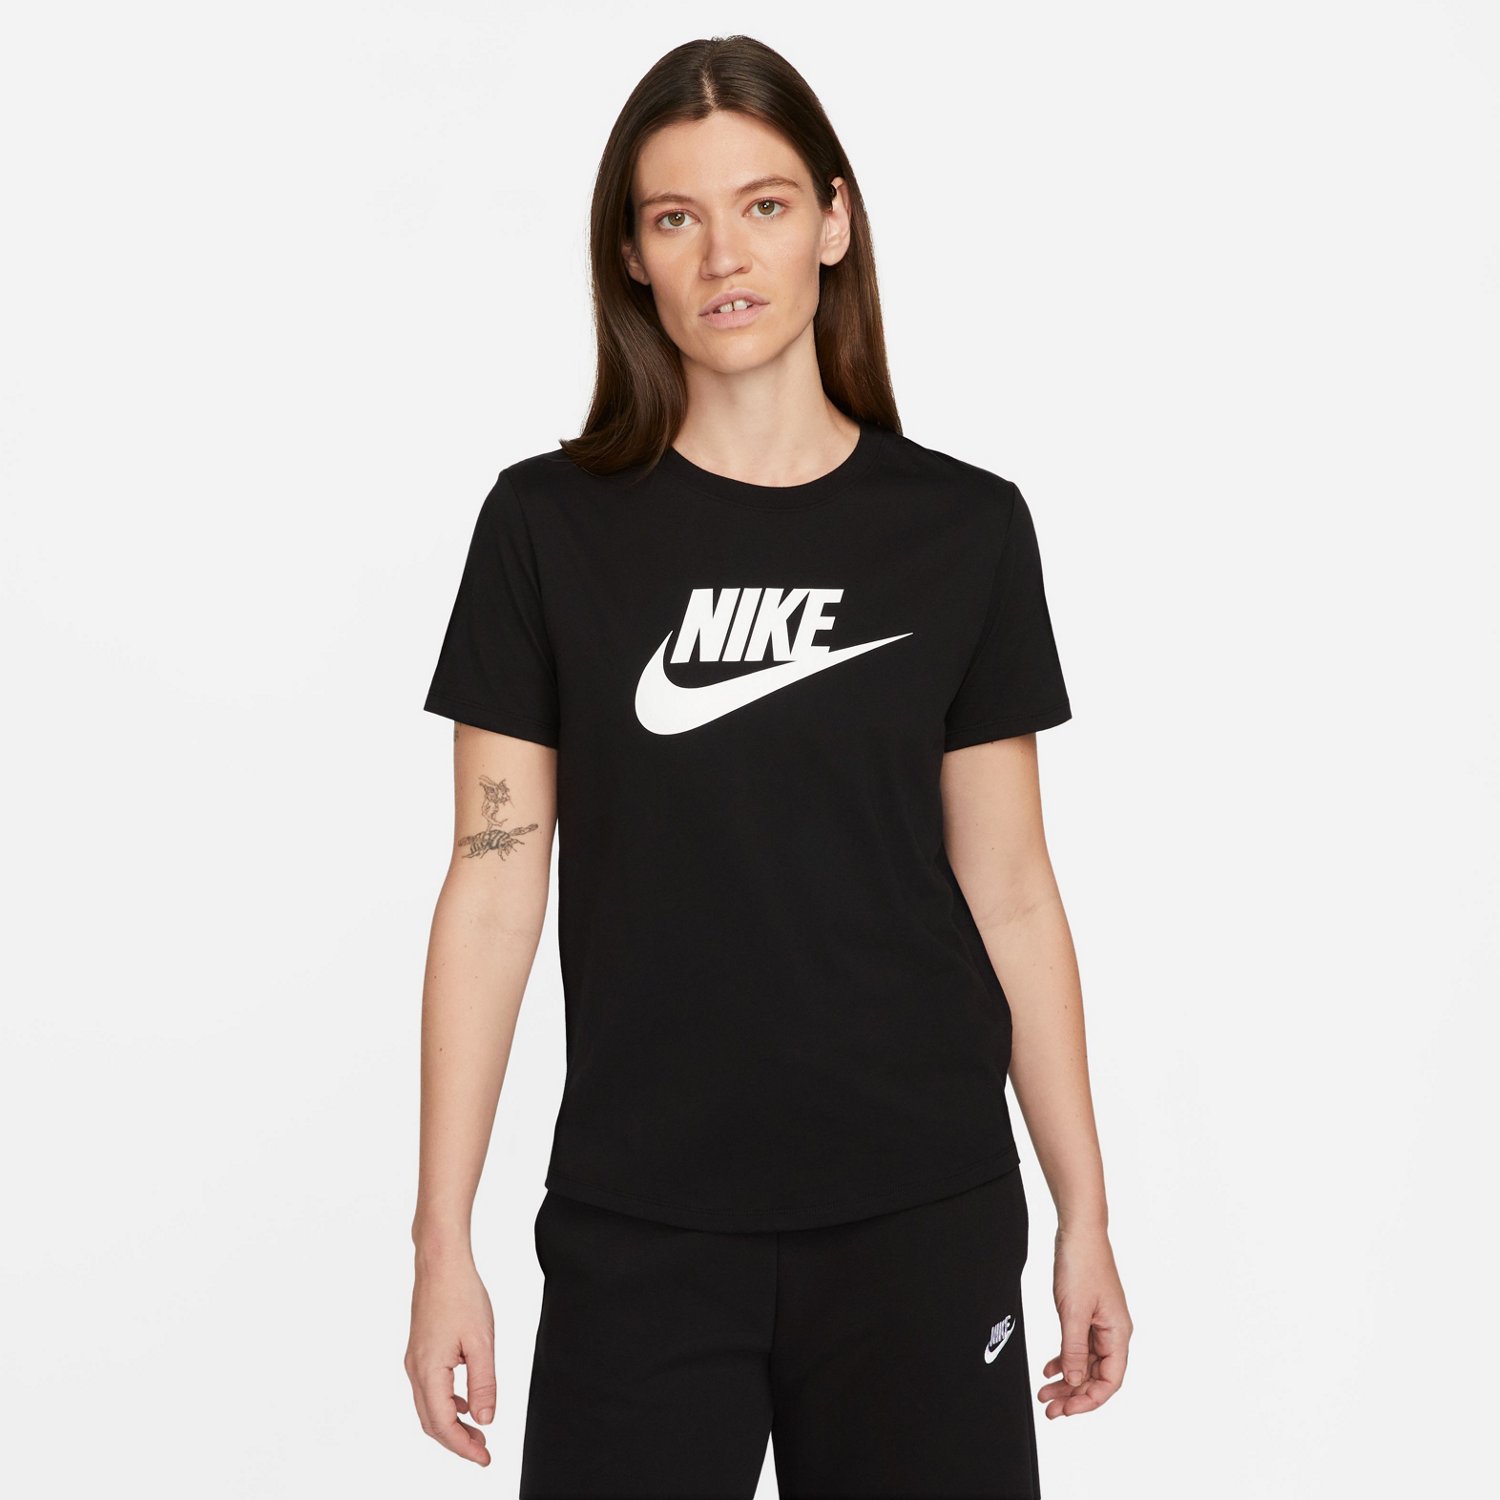 Women's Nike Clothing  Price Match Guaranteed